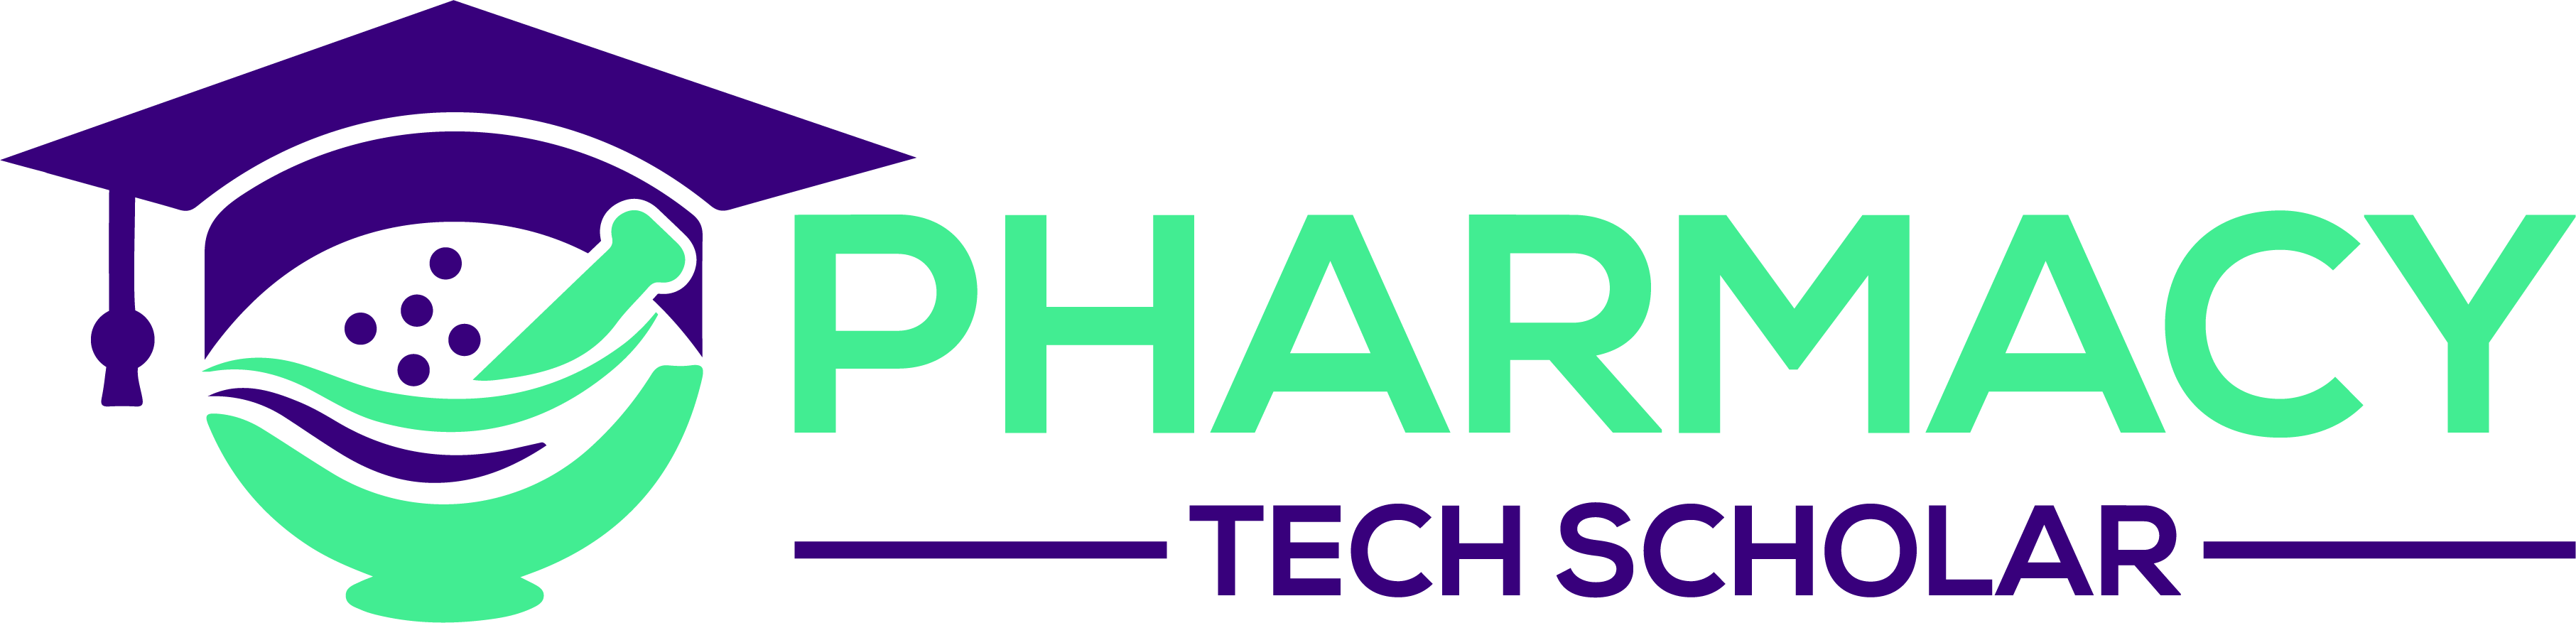 Pharmacy Tech Scholar logo